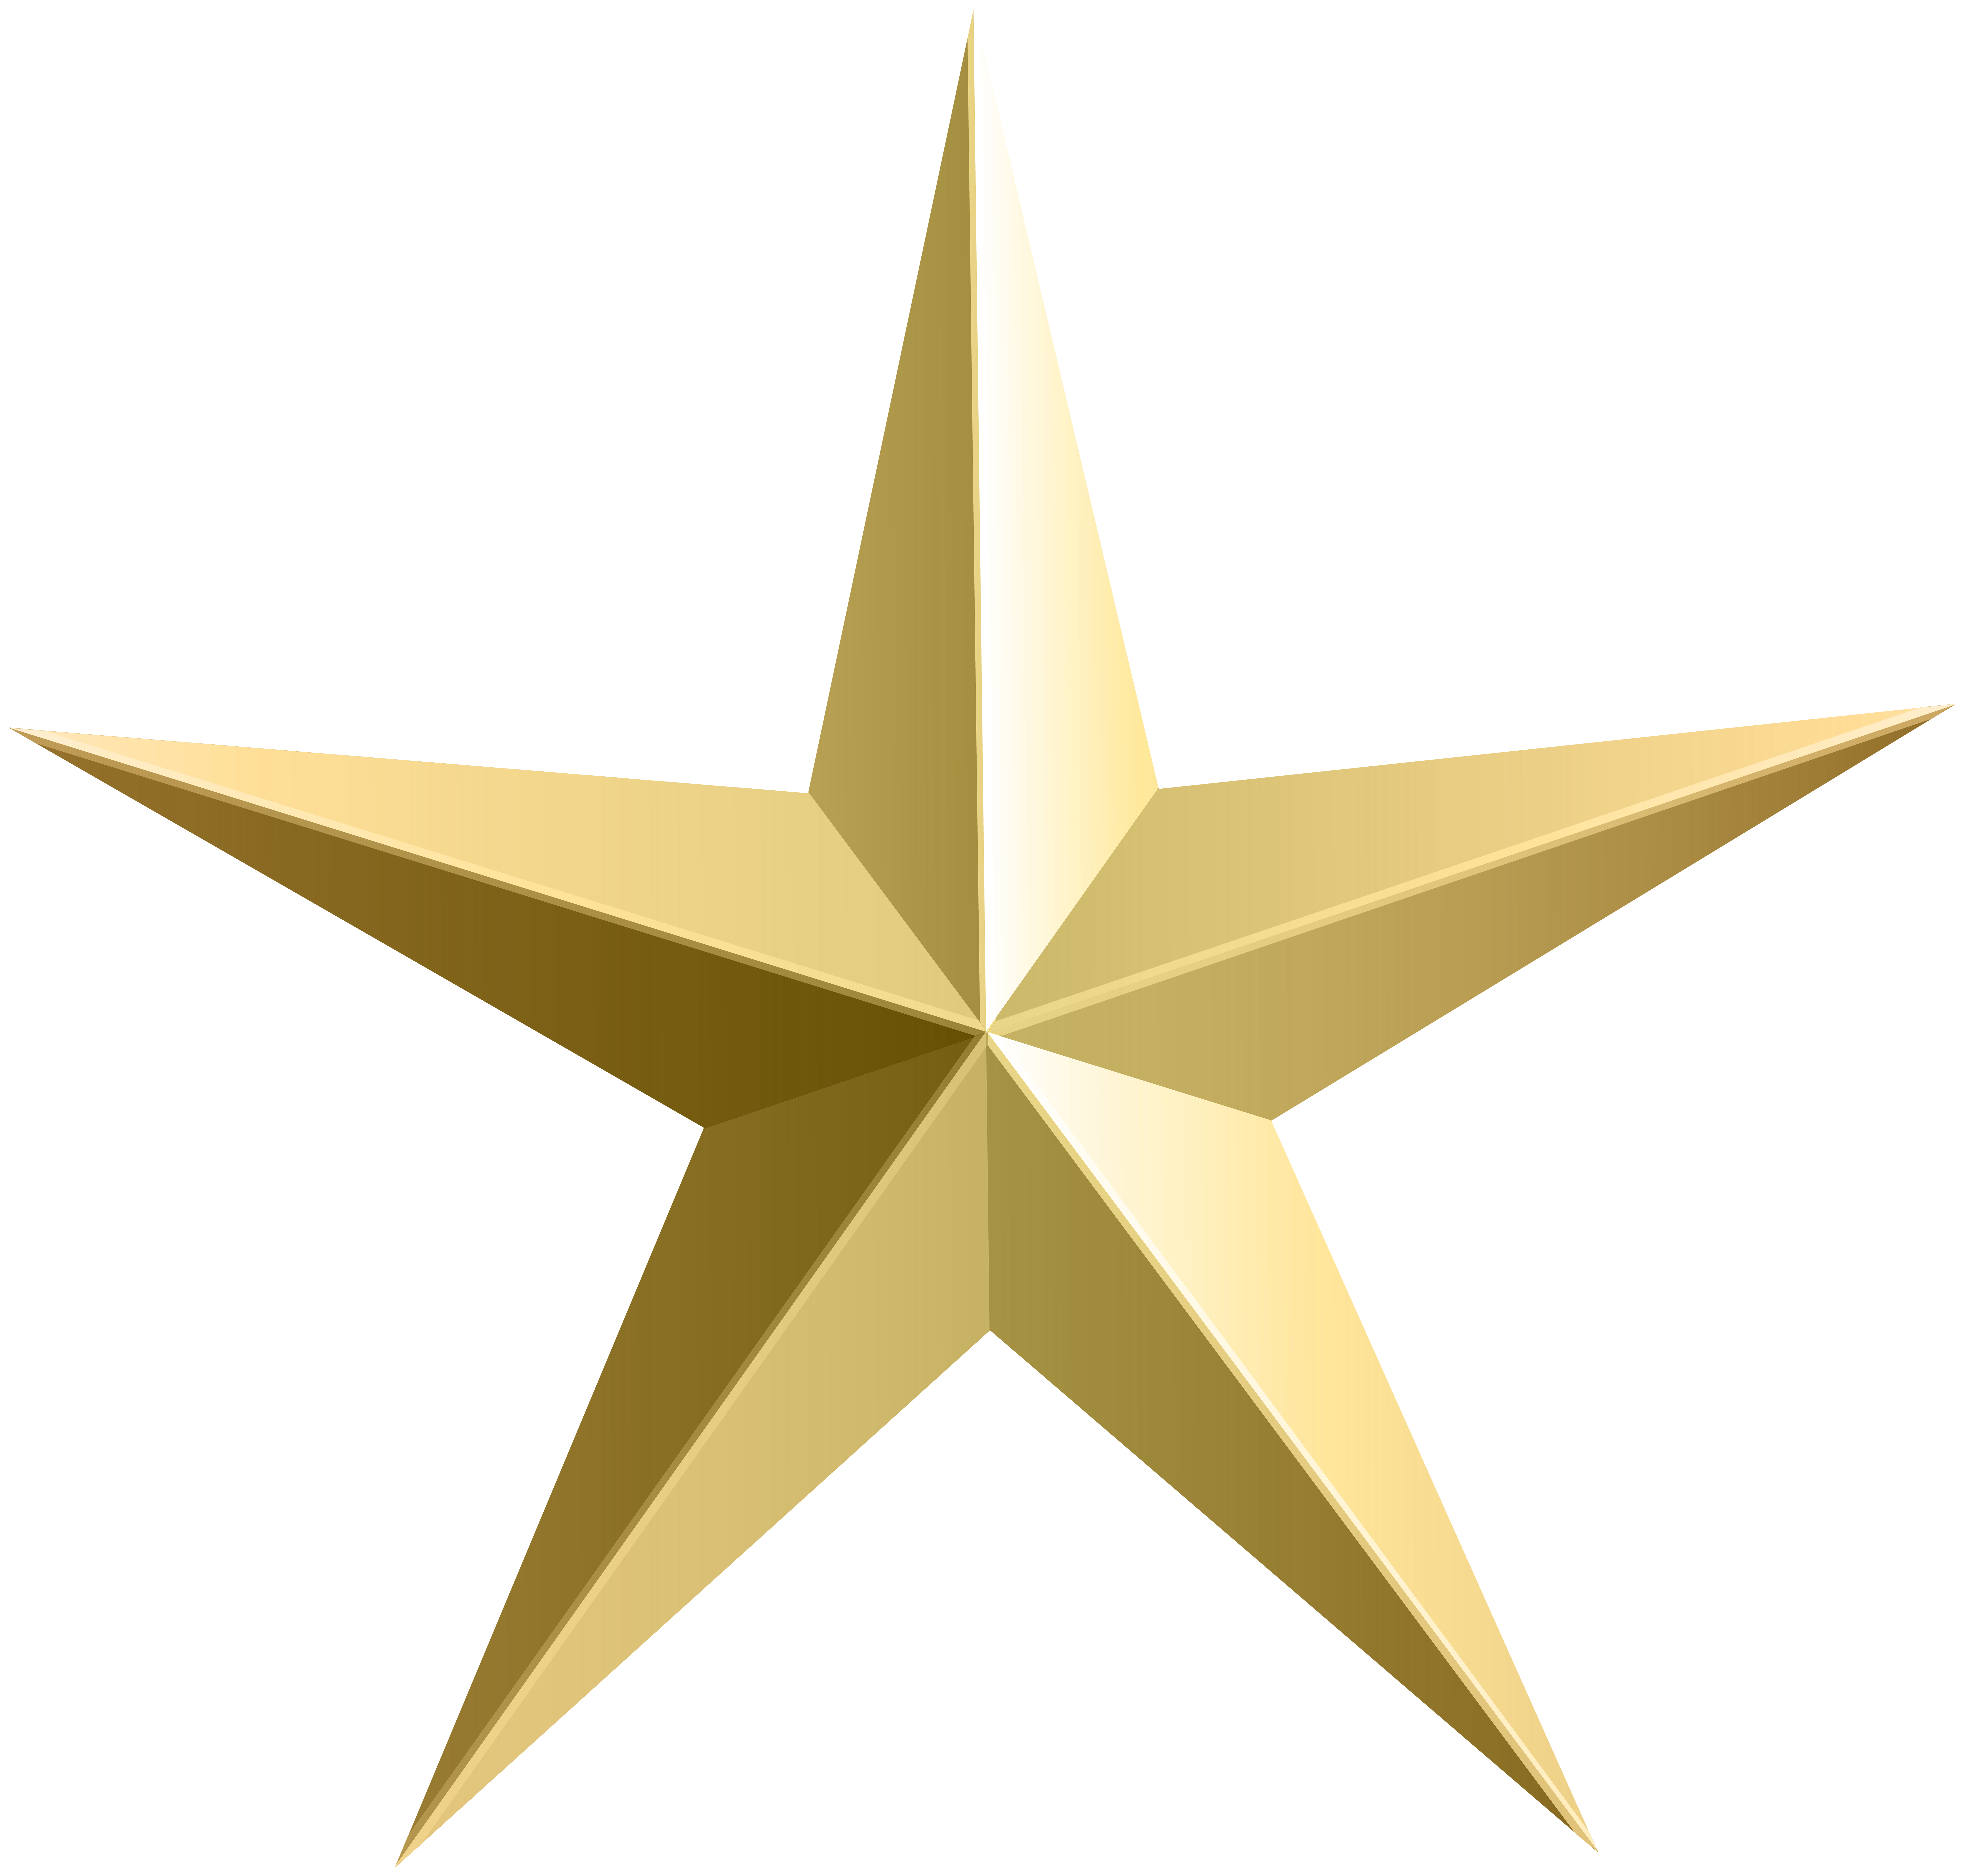 3d star logo png